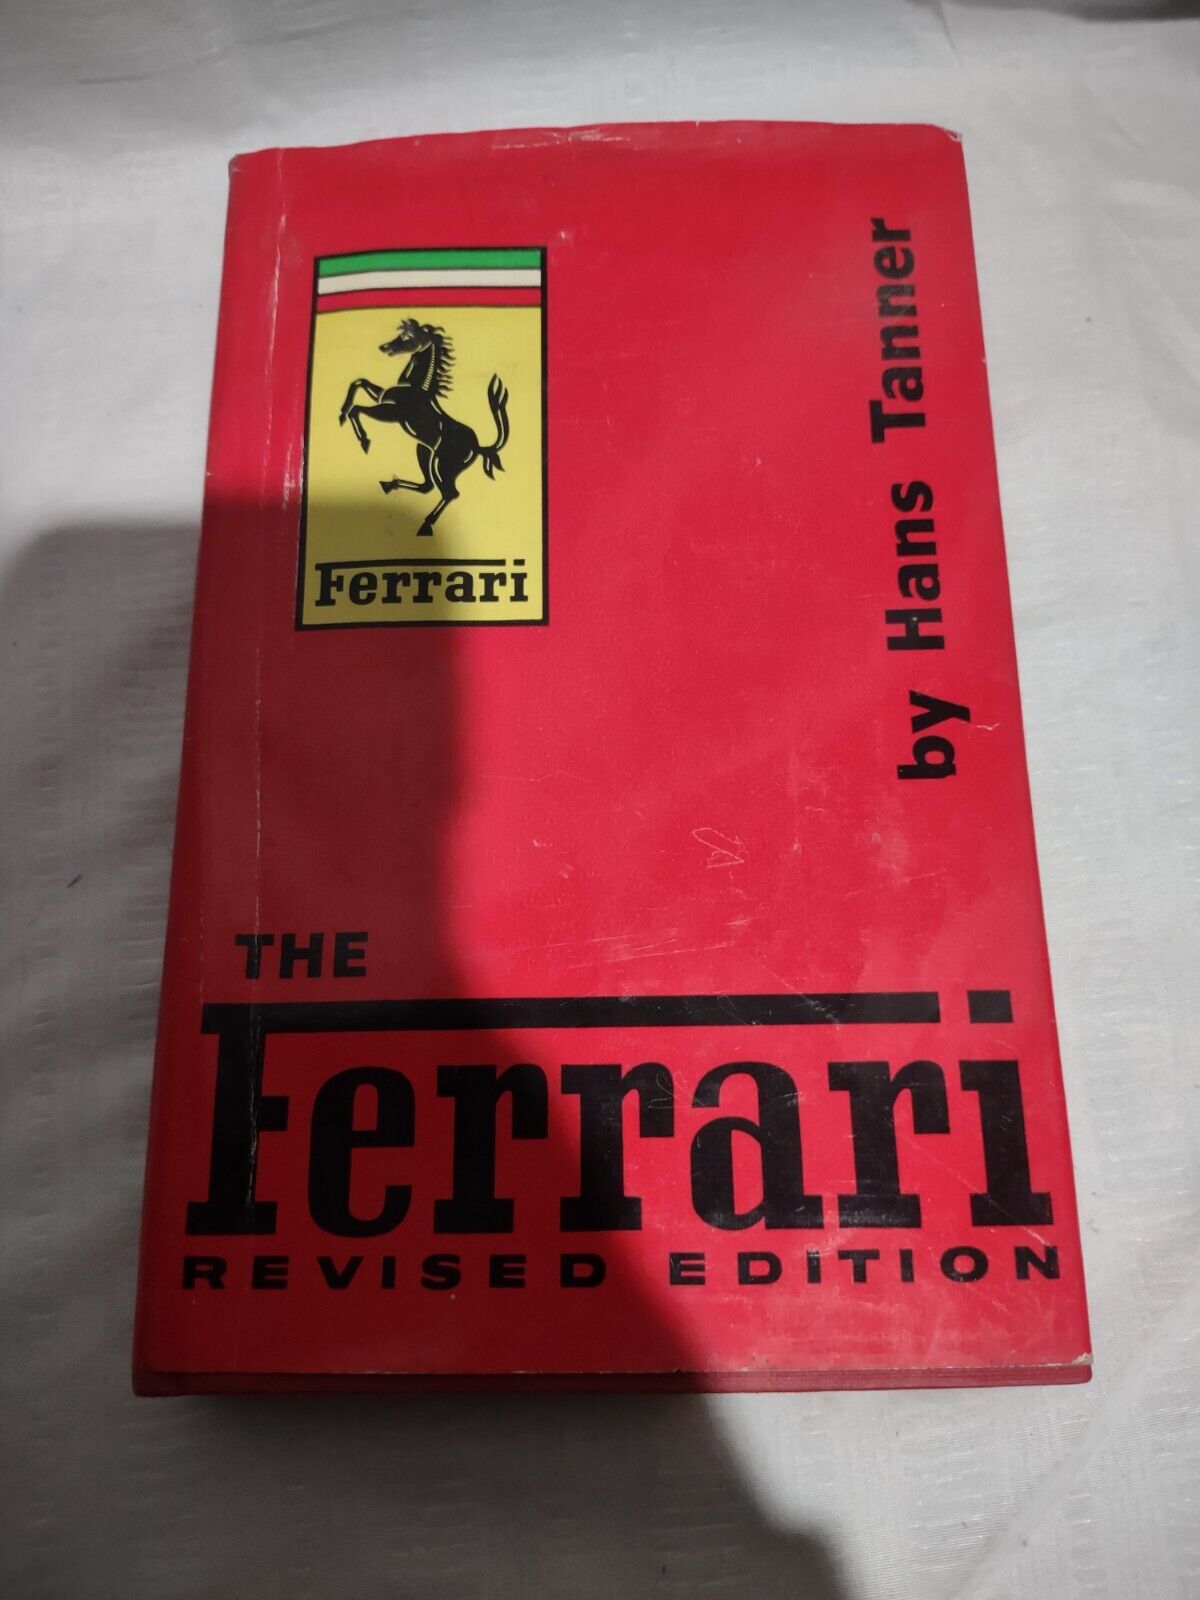 The Ferrari by Hans Tanner - Revised Edition 1966- rare early Ferrari book